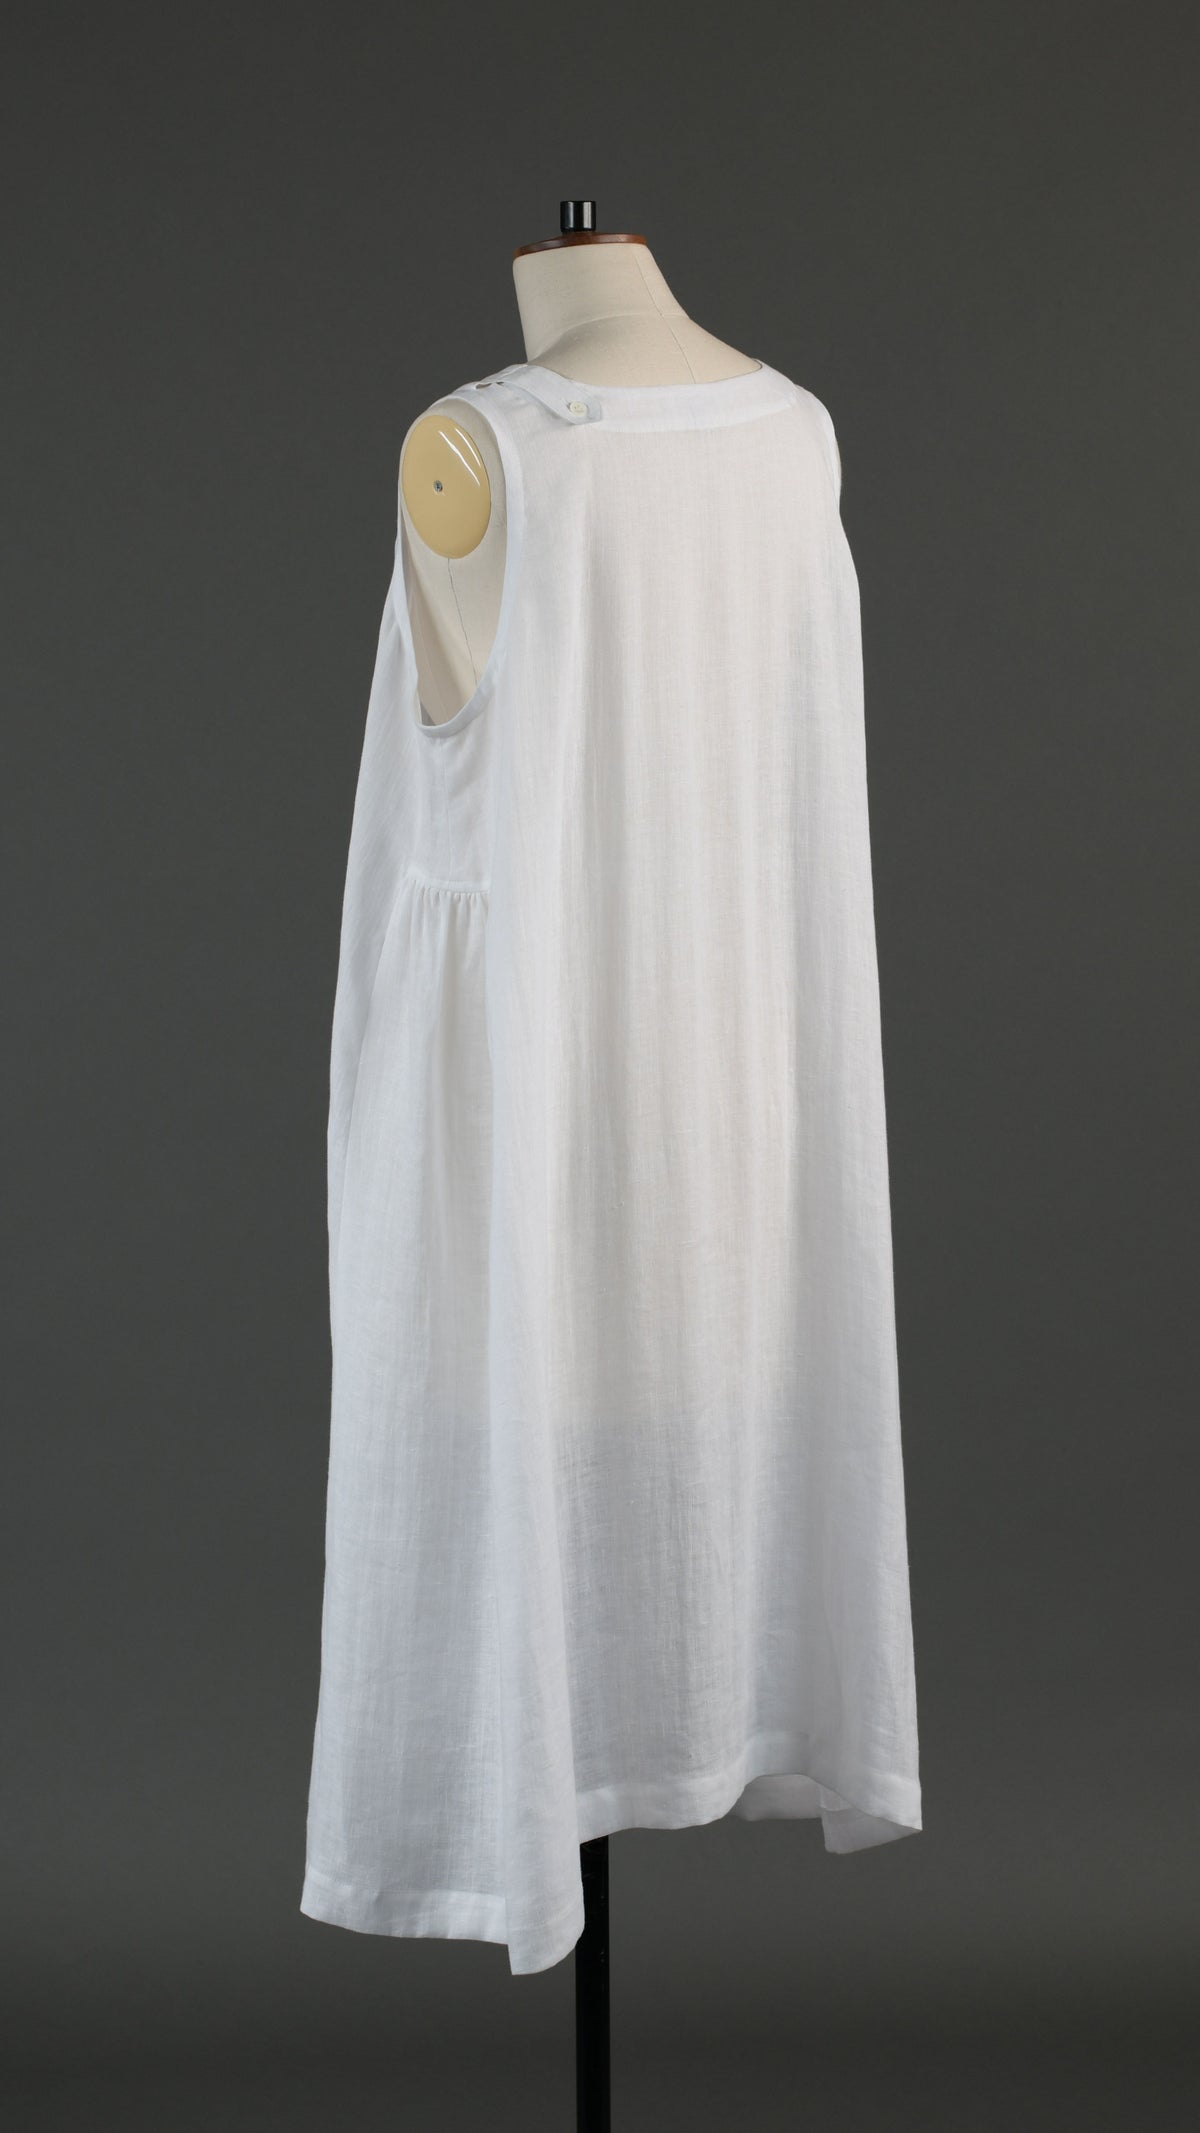 3/4 length side pleated sleeveless dress in white